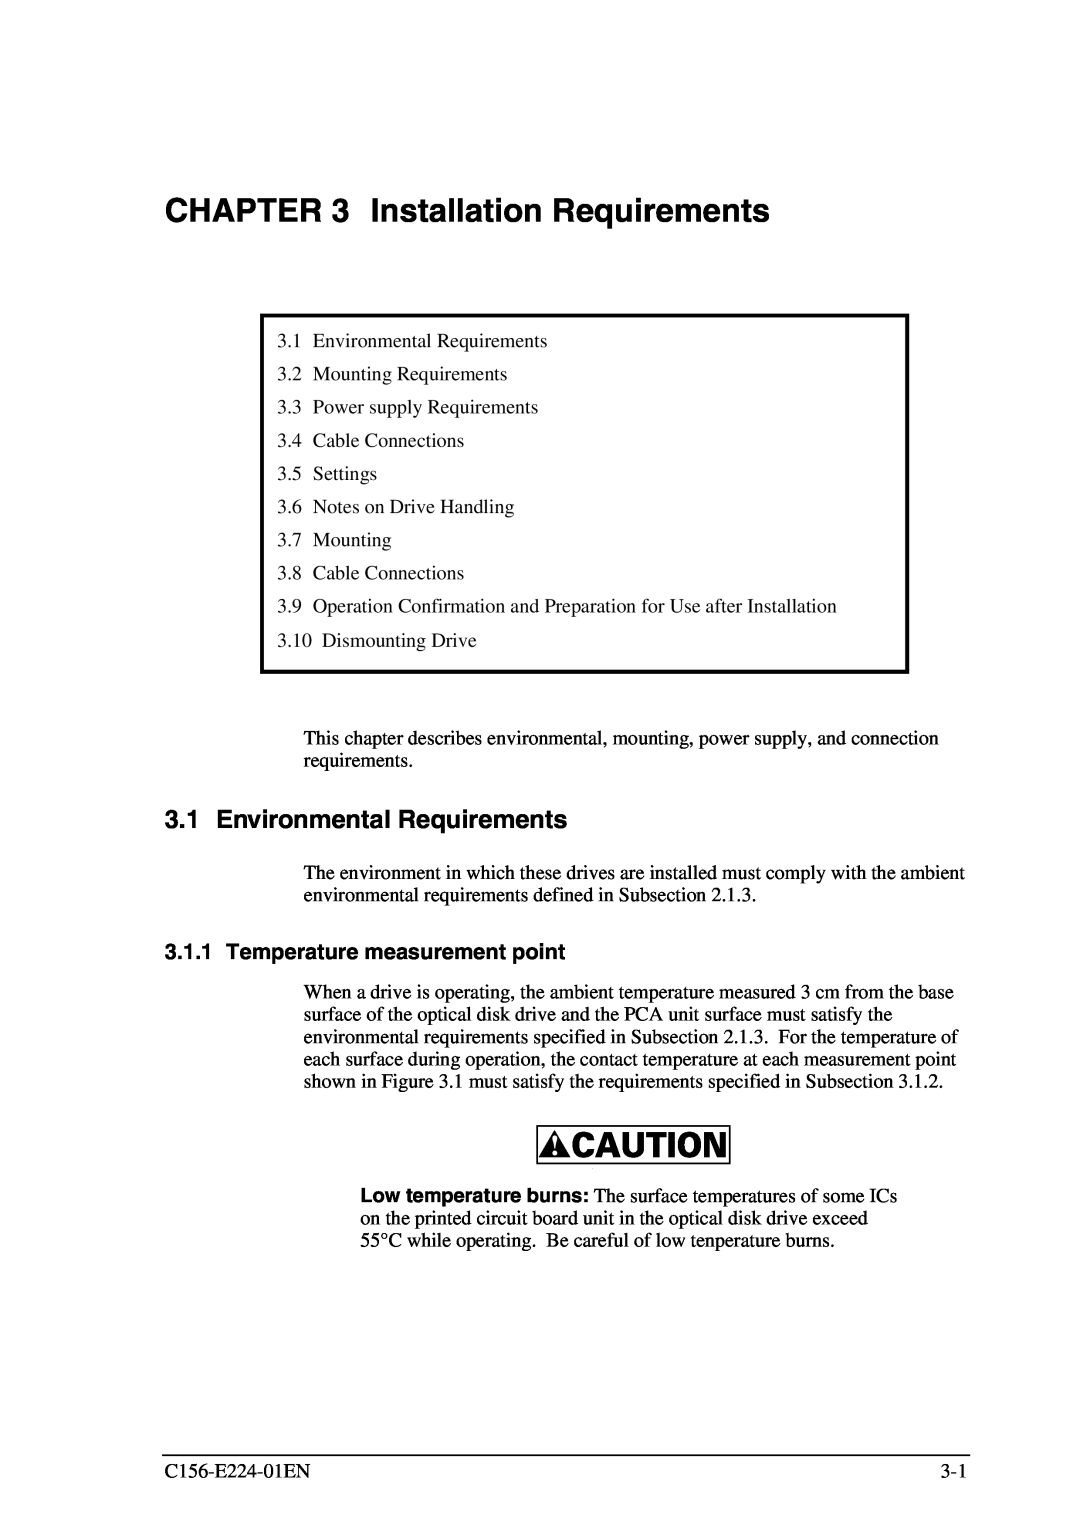 Fujitsu MCJ3230SS manual Installation Requirements, Environmental Requirements, Temperature measurement point 